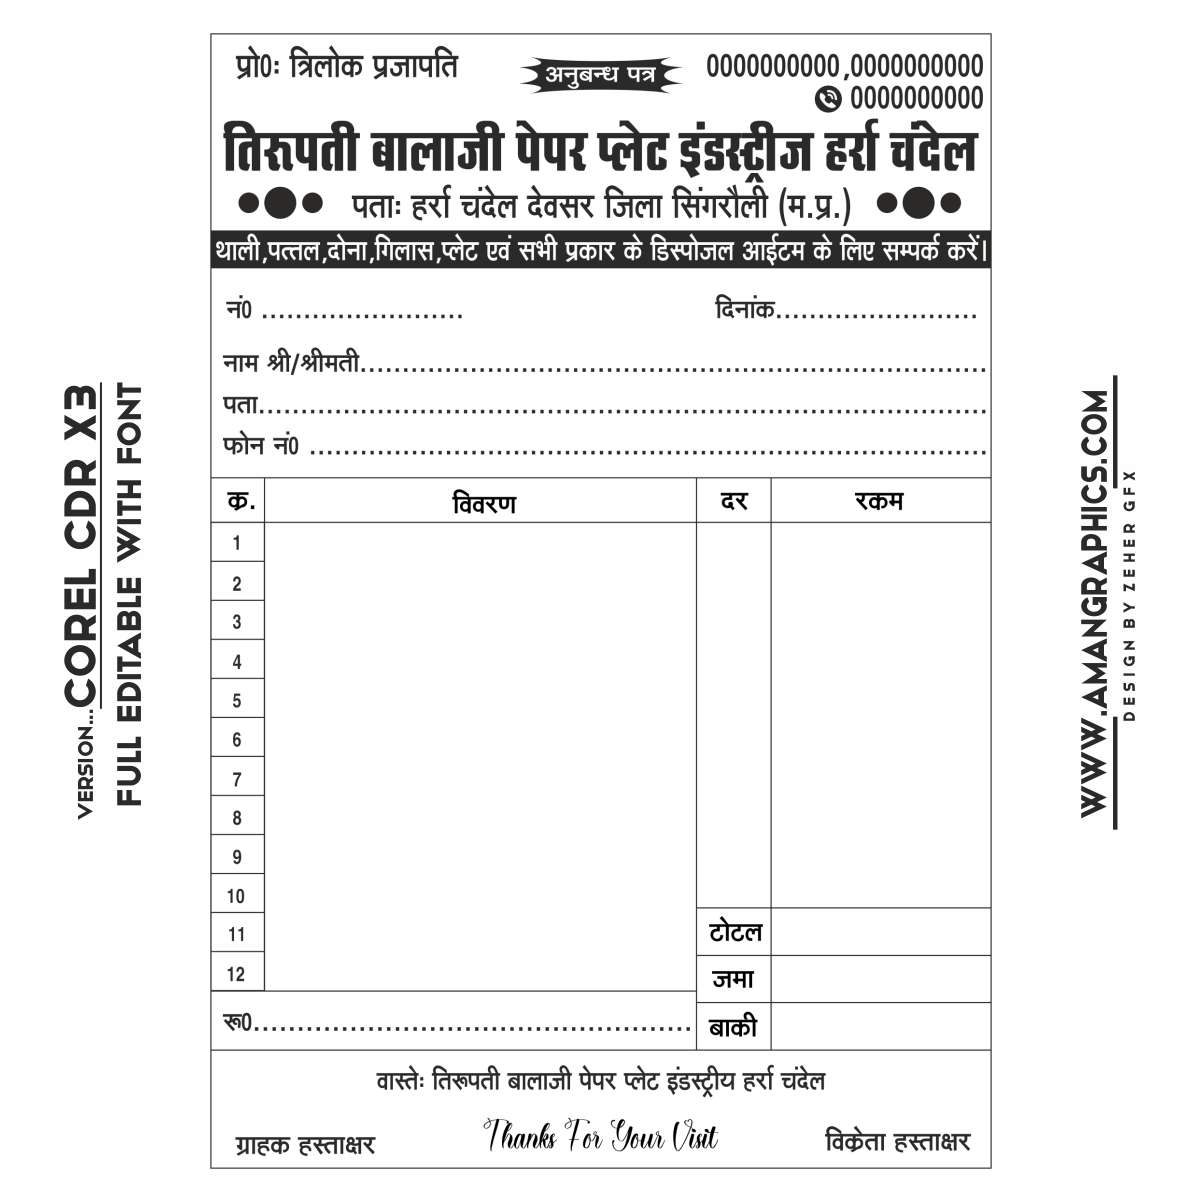 Tirupati Balaji Paper Plate industries Disposable Store Bill Book Design BILL BOOK BILL BOOK DESIGN